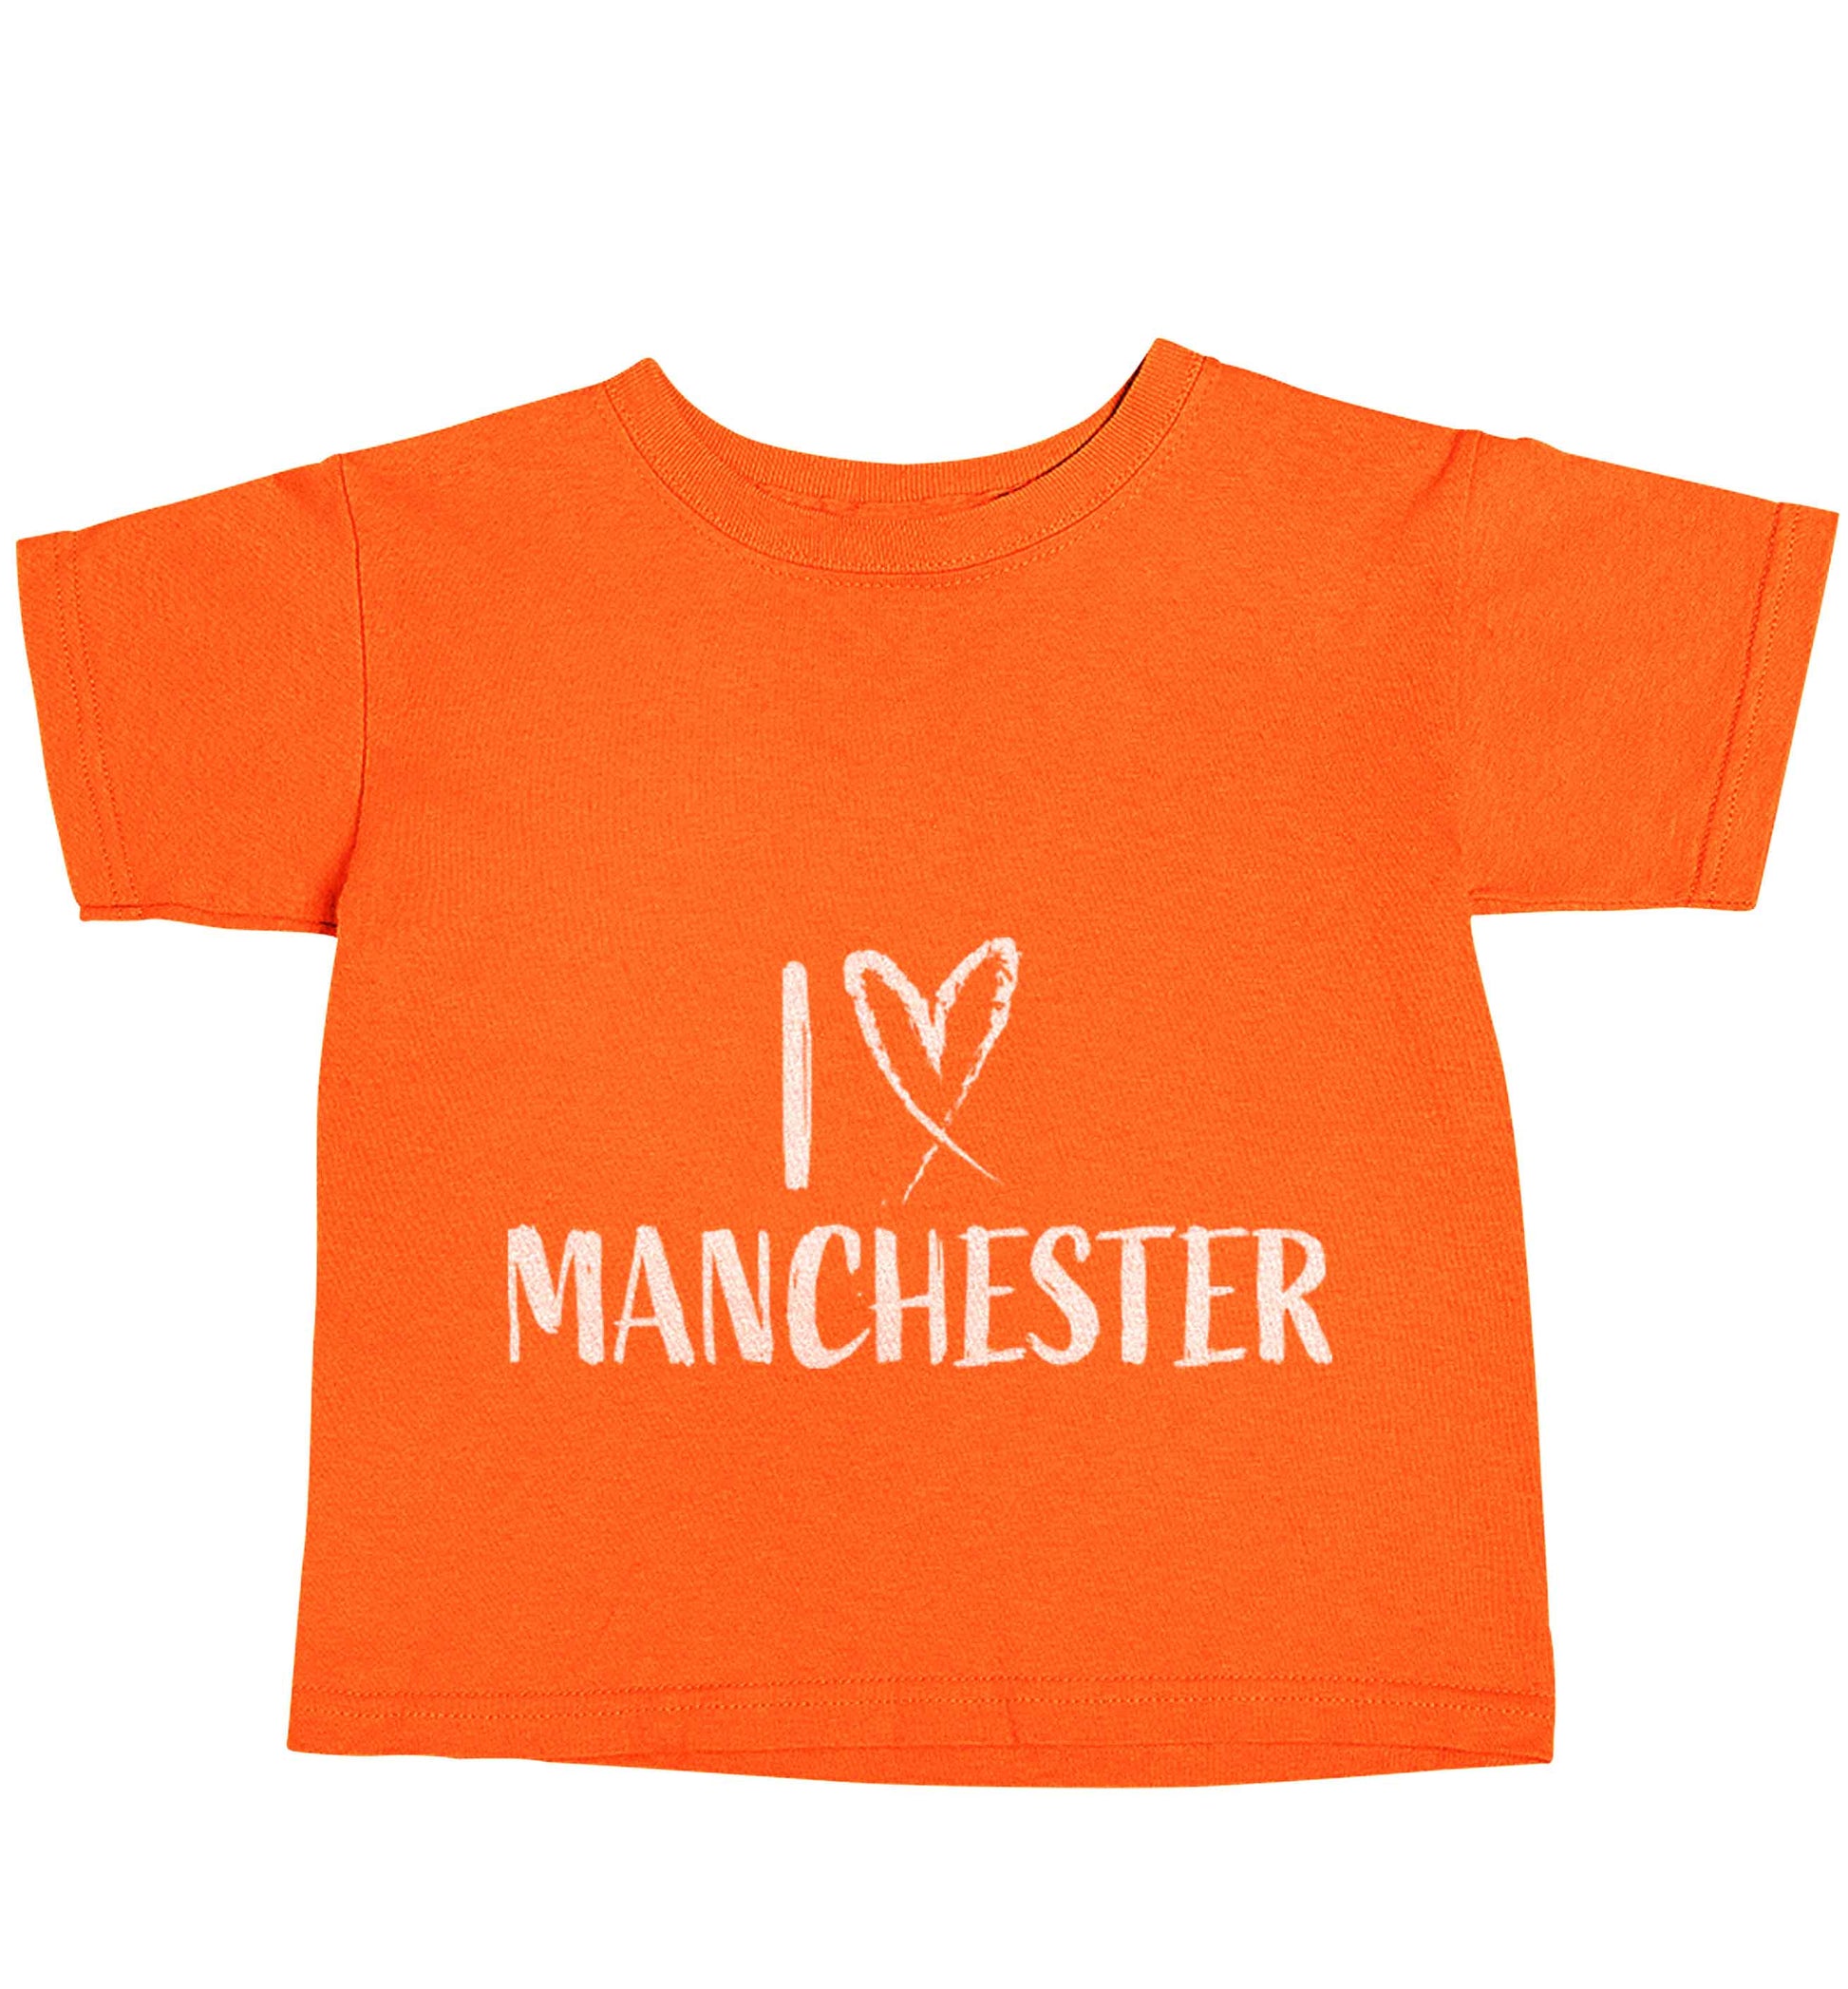 I love Manchester orange baby toddler Tshirt 2 Years